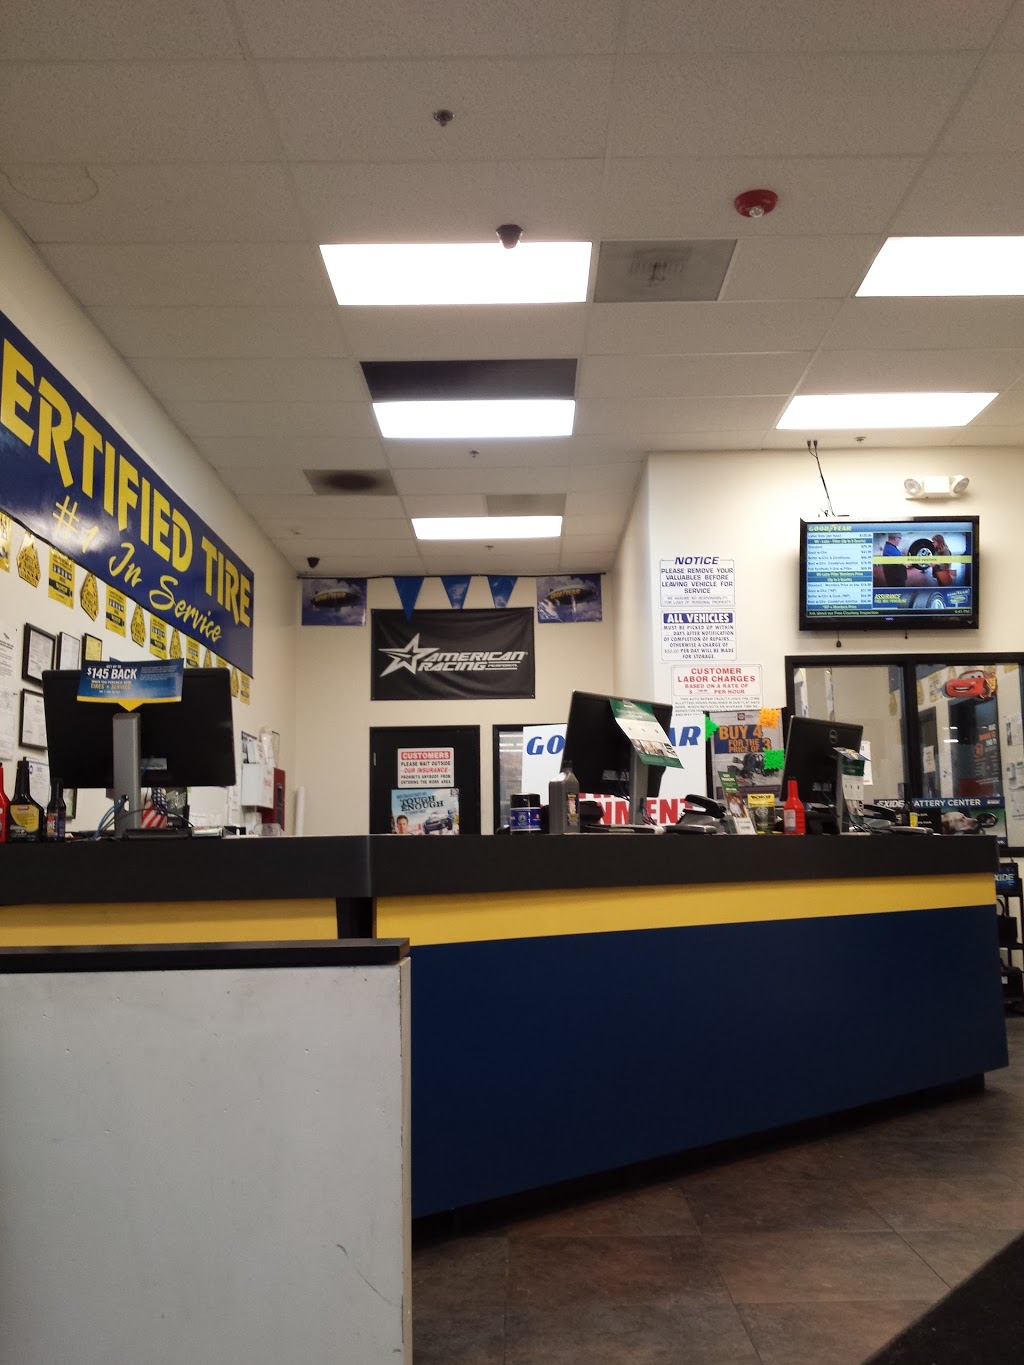 Tire Choice Auto Service Centers | 16190 Perris Blvd, Moreno Valley, CA 92551, USA | Phone: (951) 381-0325